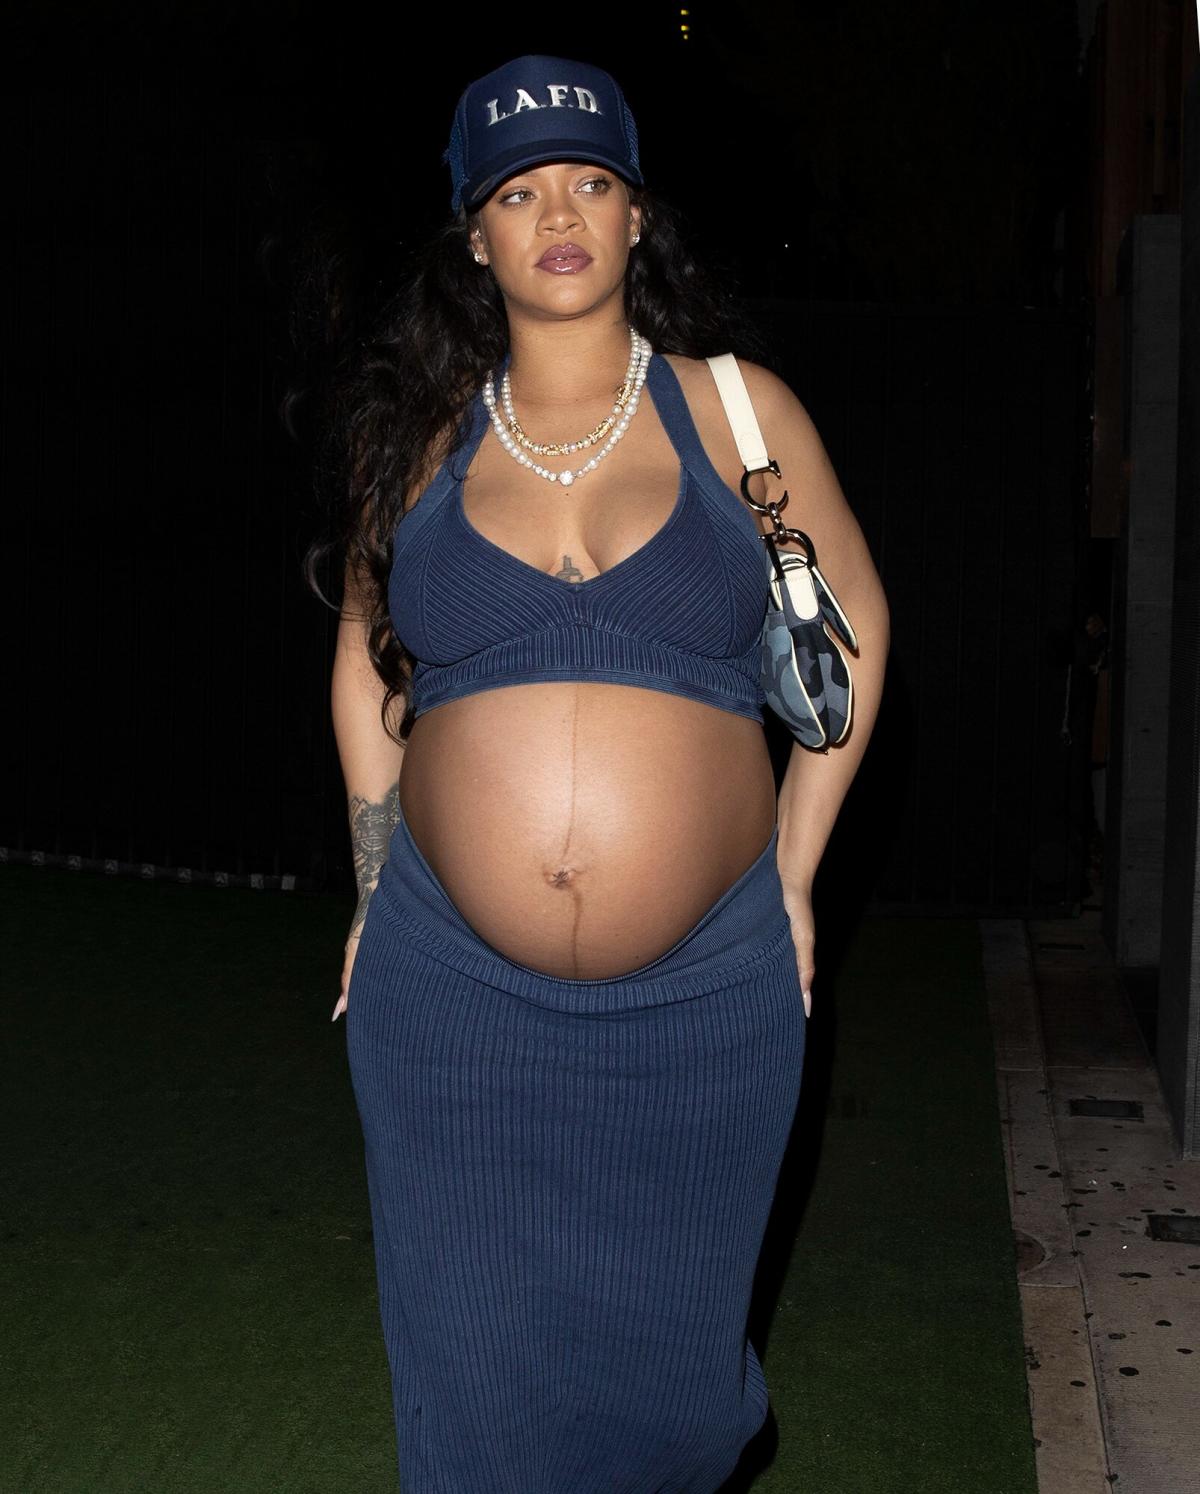 Pregnant Rihanna bares baby bump in new Louis Vuitton campaign